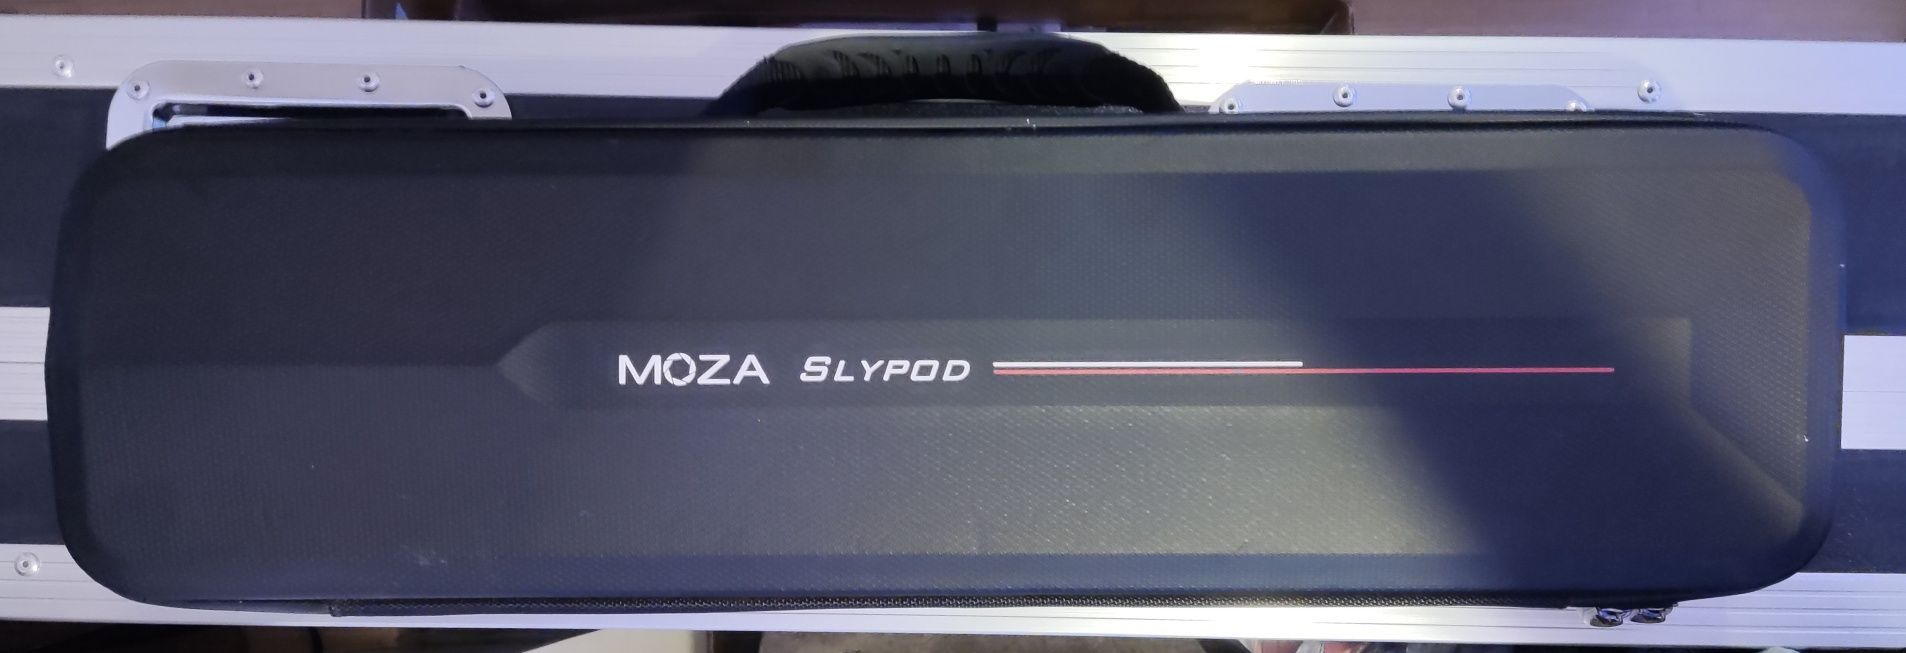 Slider motorizat camera video - Moza